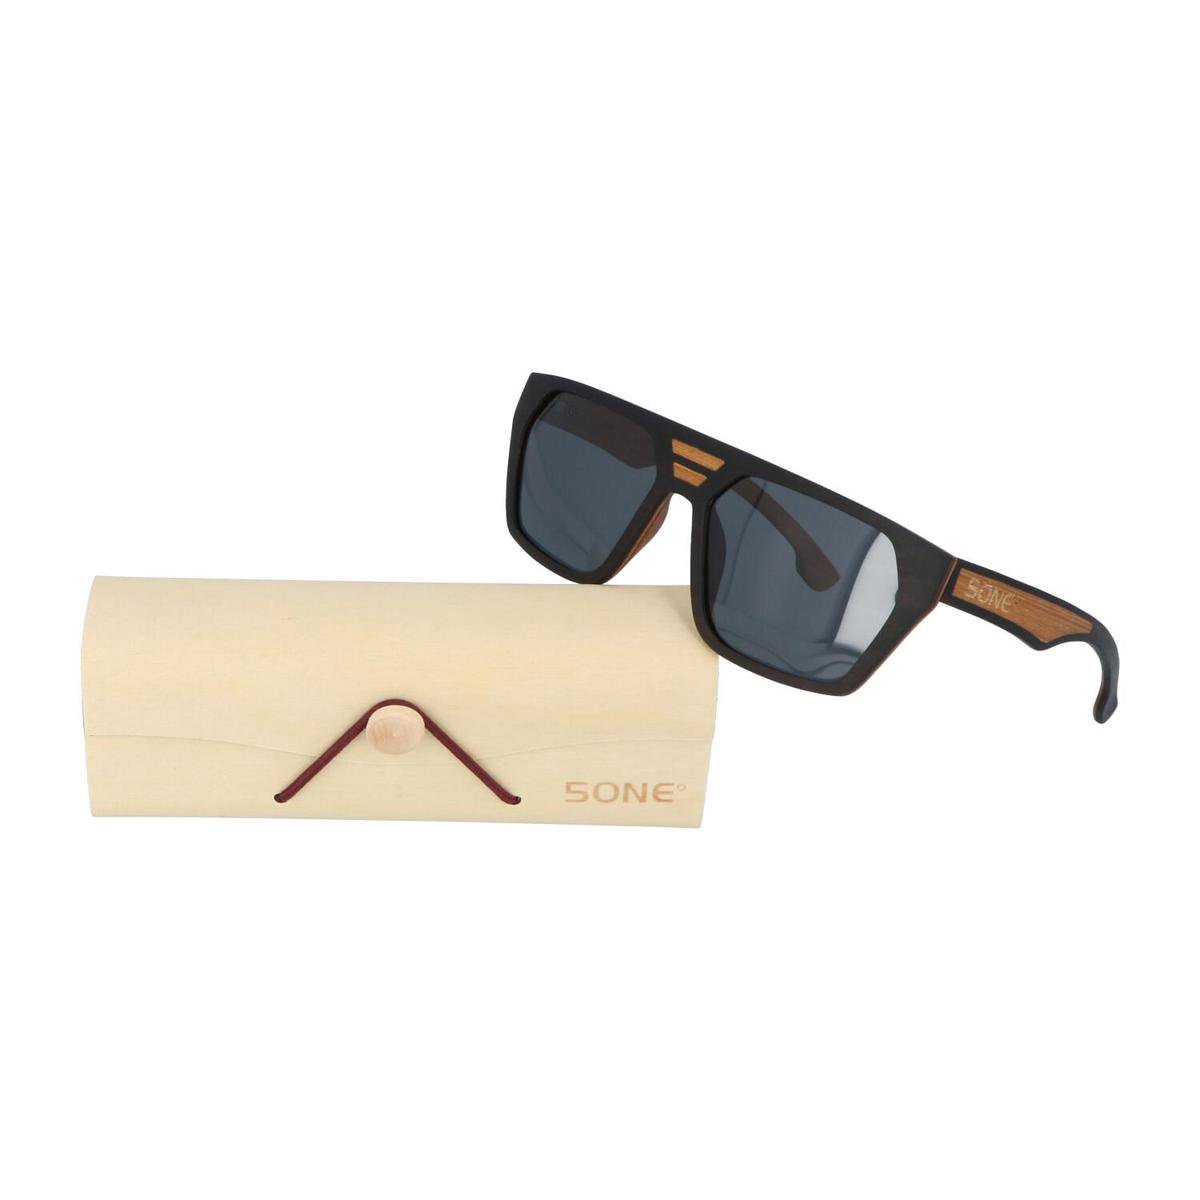 5one® Perugia Pilot 2.0 - Ebony/teak houten zonnebril met grijze lens